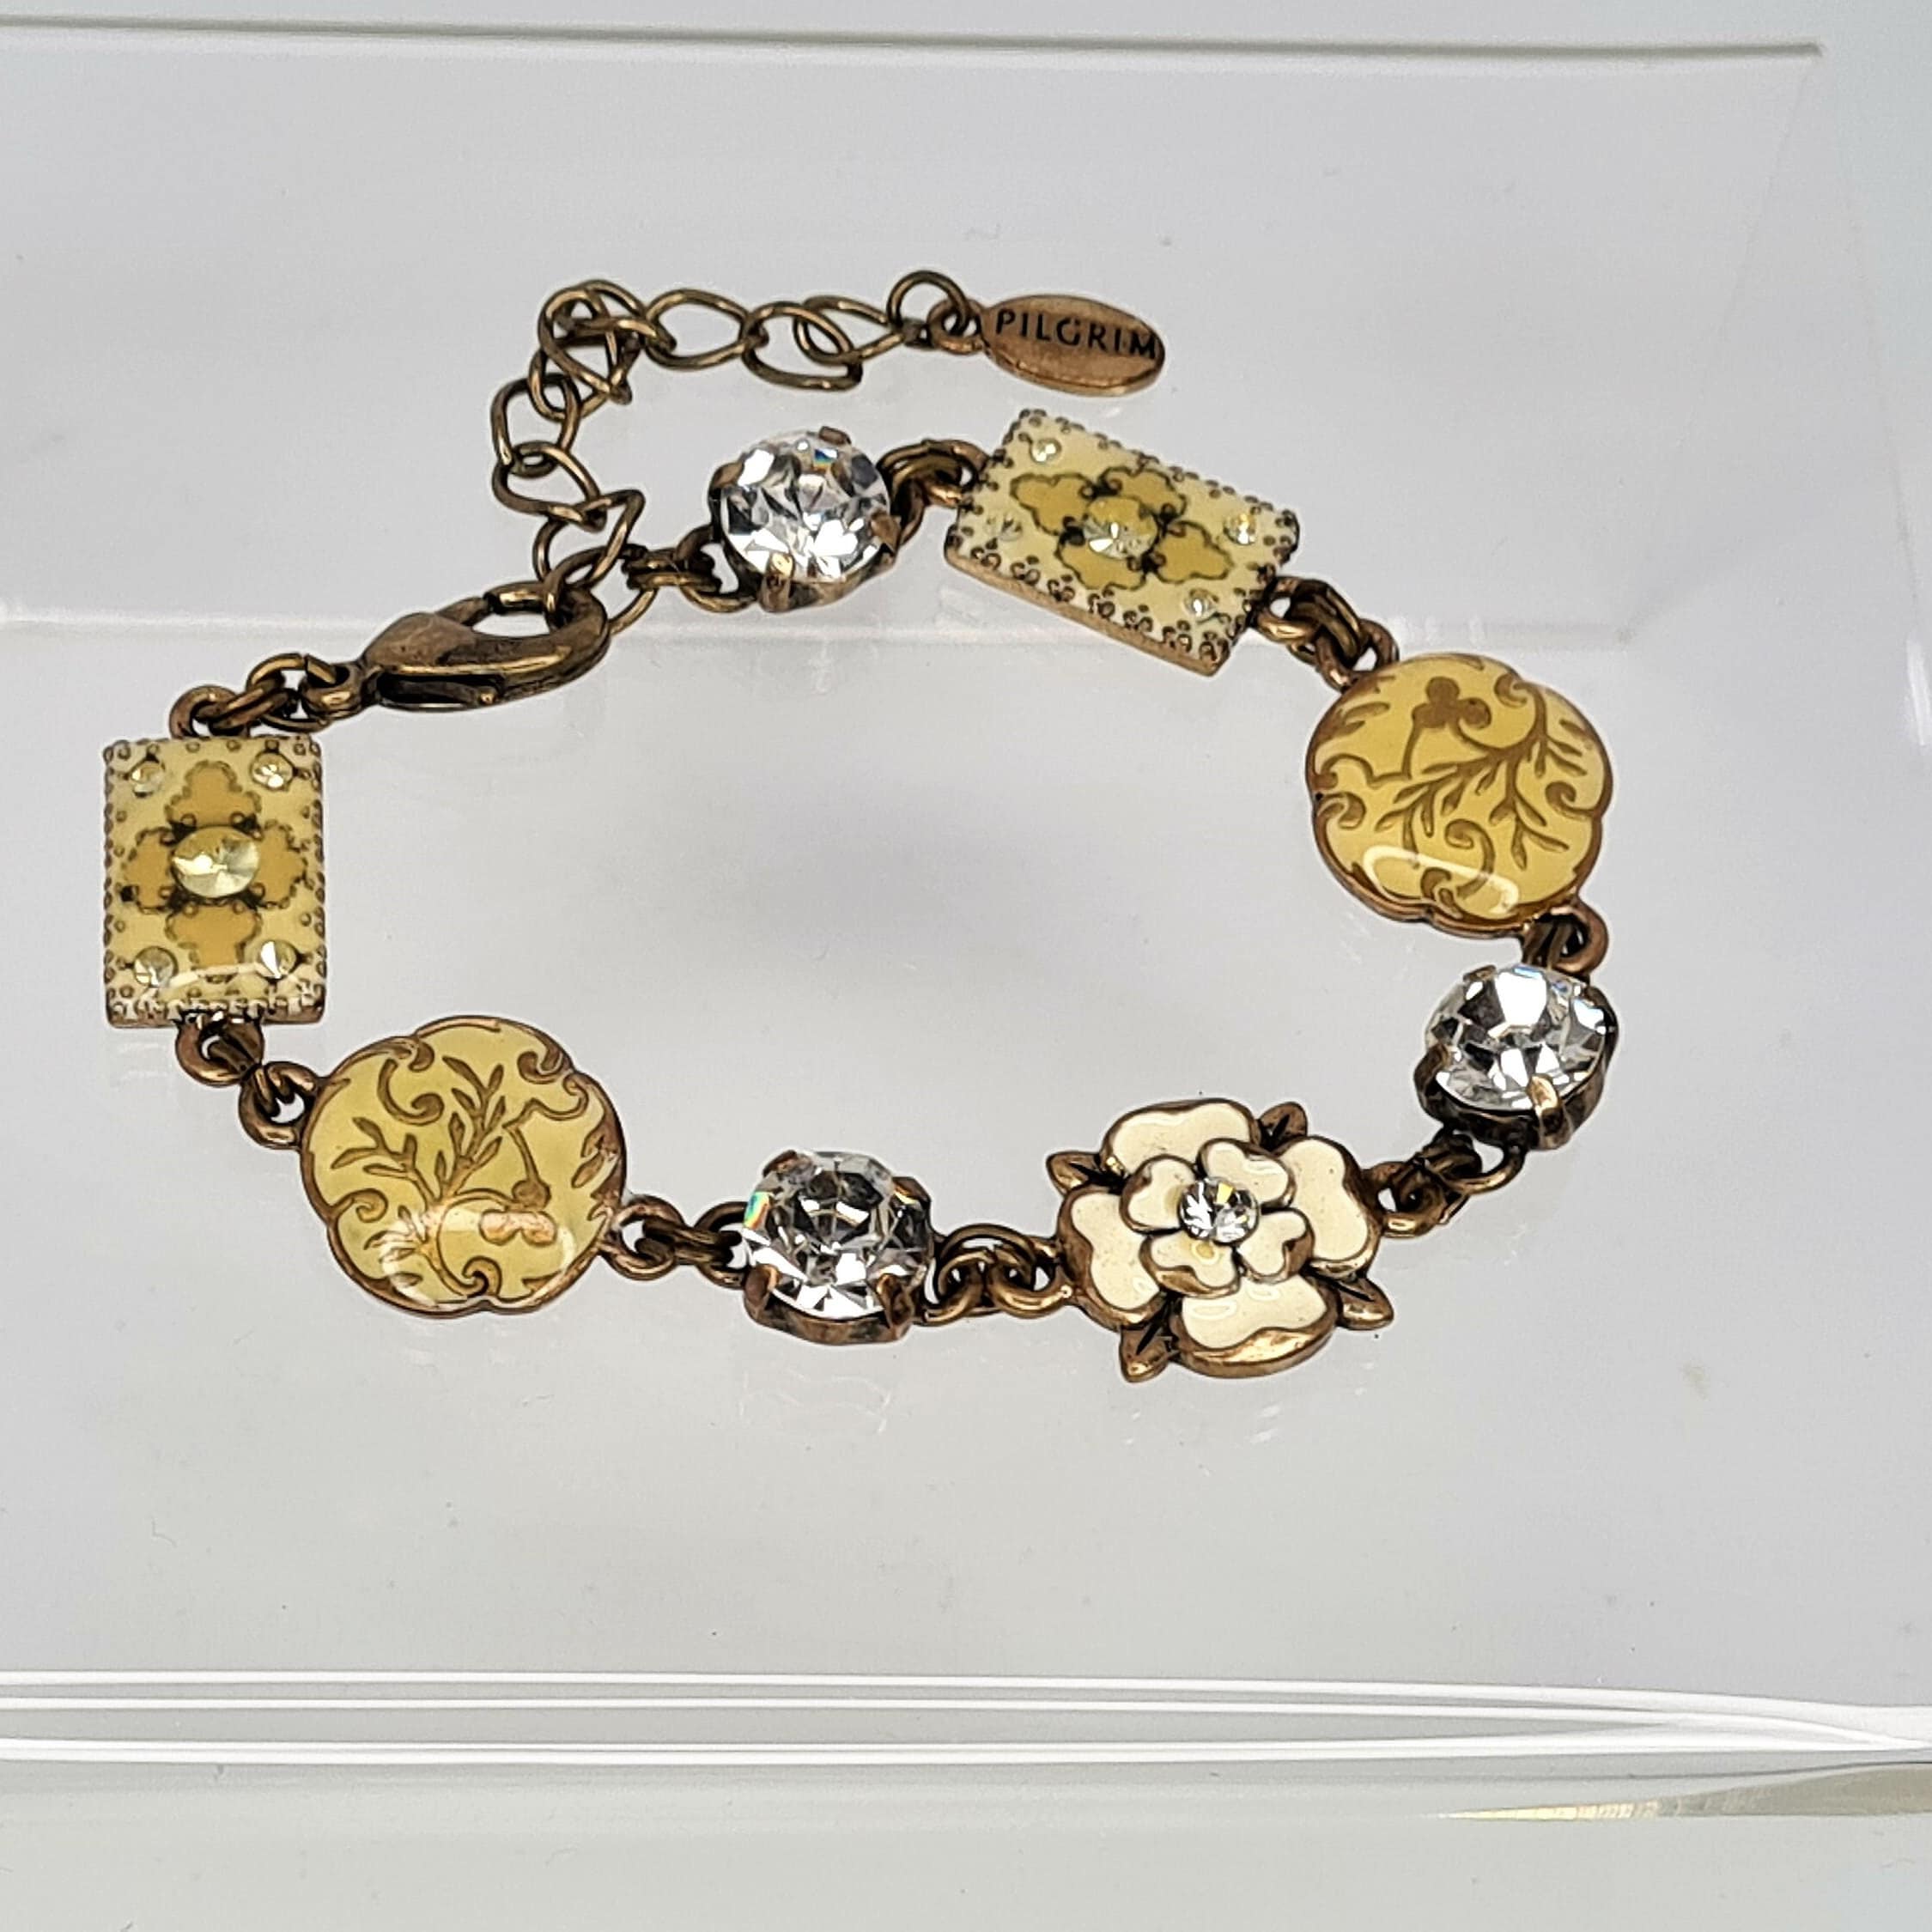 Danish Pilgrim Vintage Bracelet Flowers and Crystals - Etsy